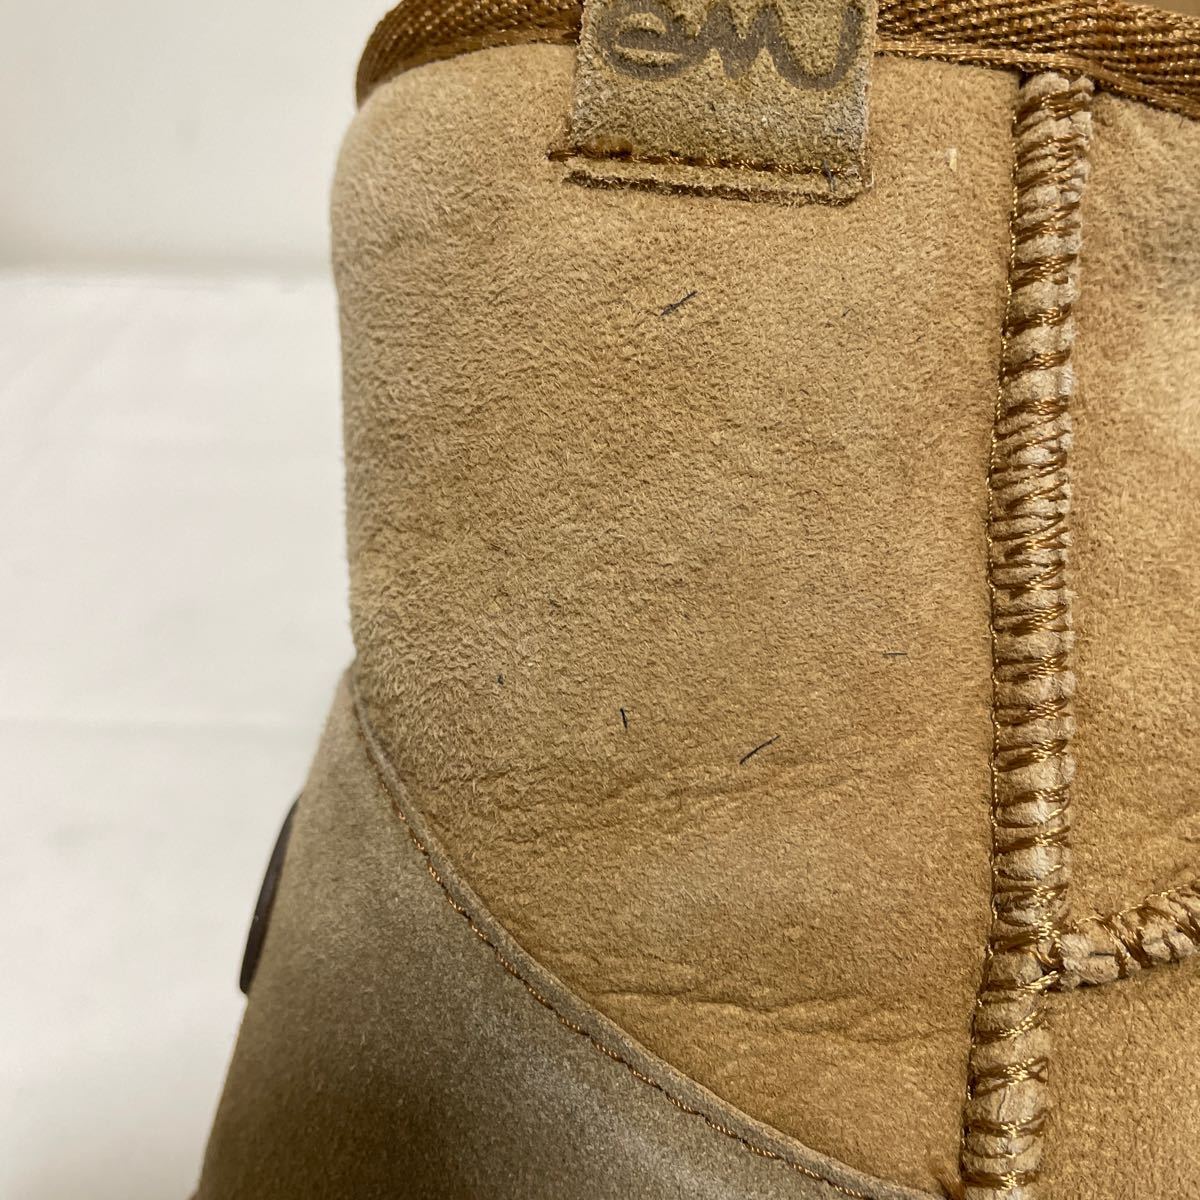  мир 110* с коробкой emu Emu мутон ботинки короткие сапоги замша кожа W6 23 женский бежевый 